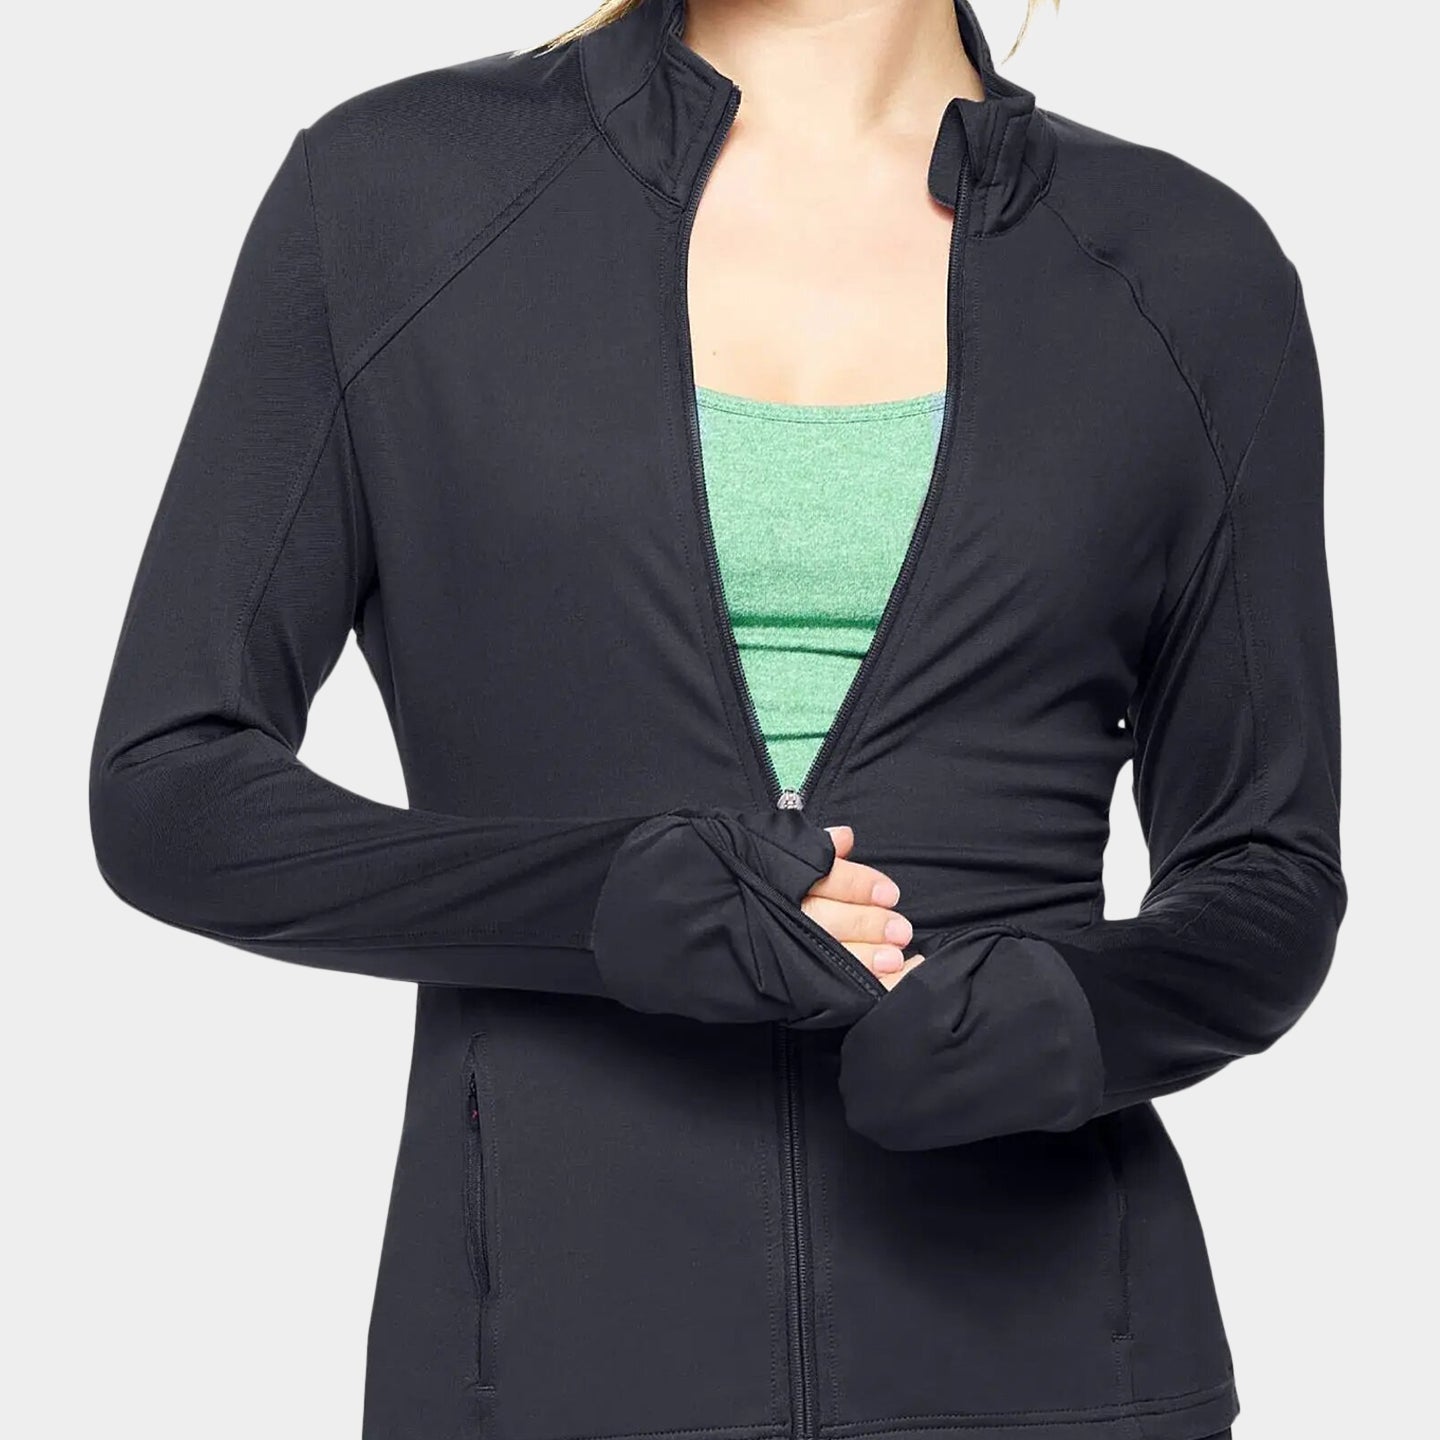 Expert Brand Women's Full Zip Athletic Training Jacket A1